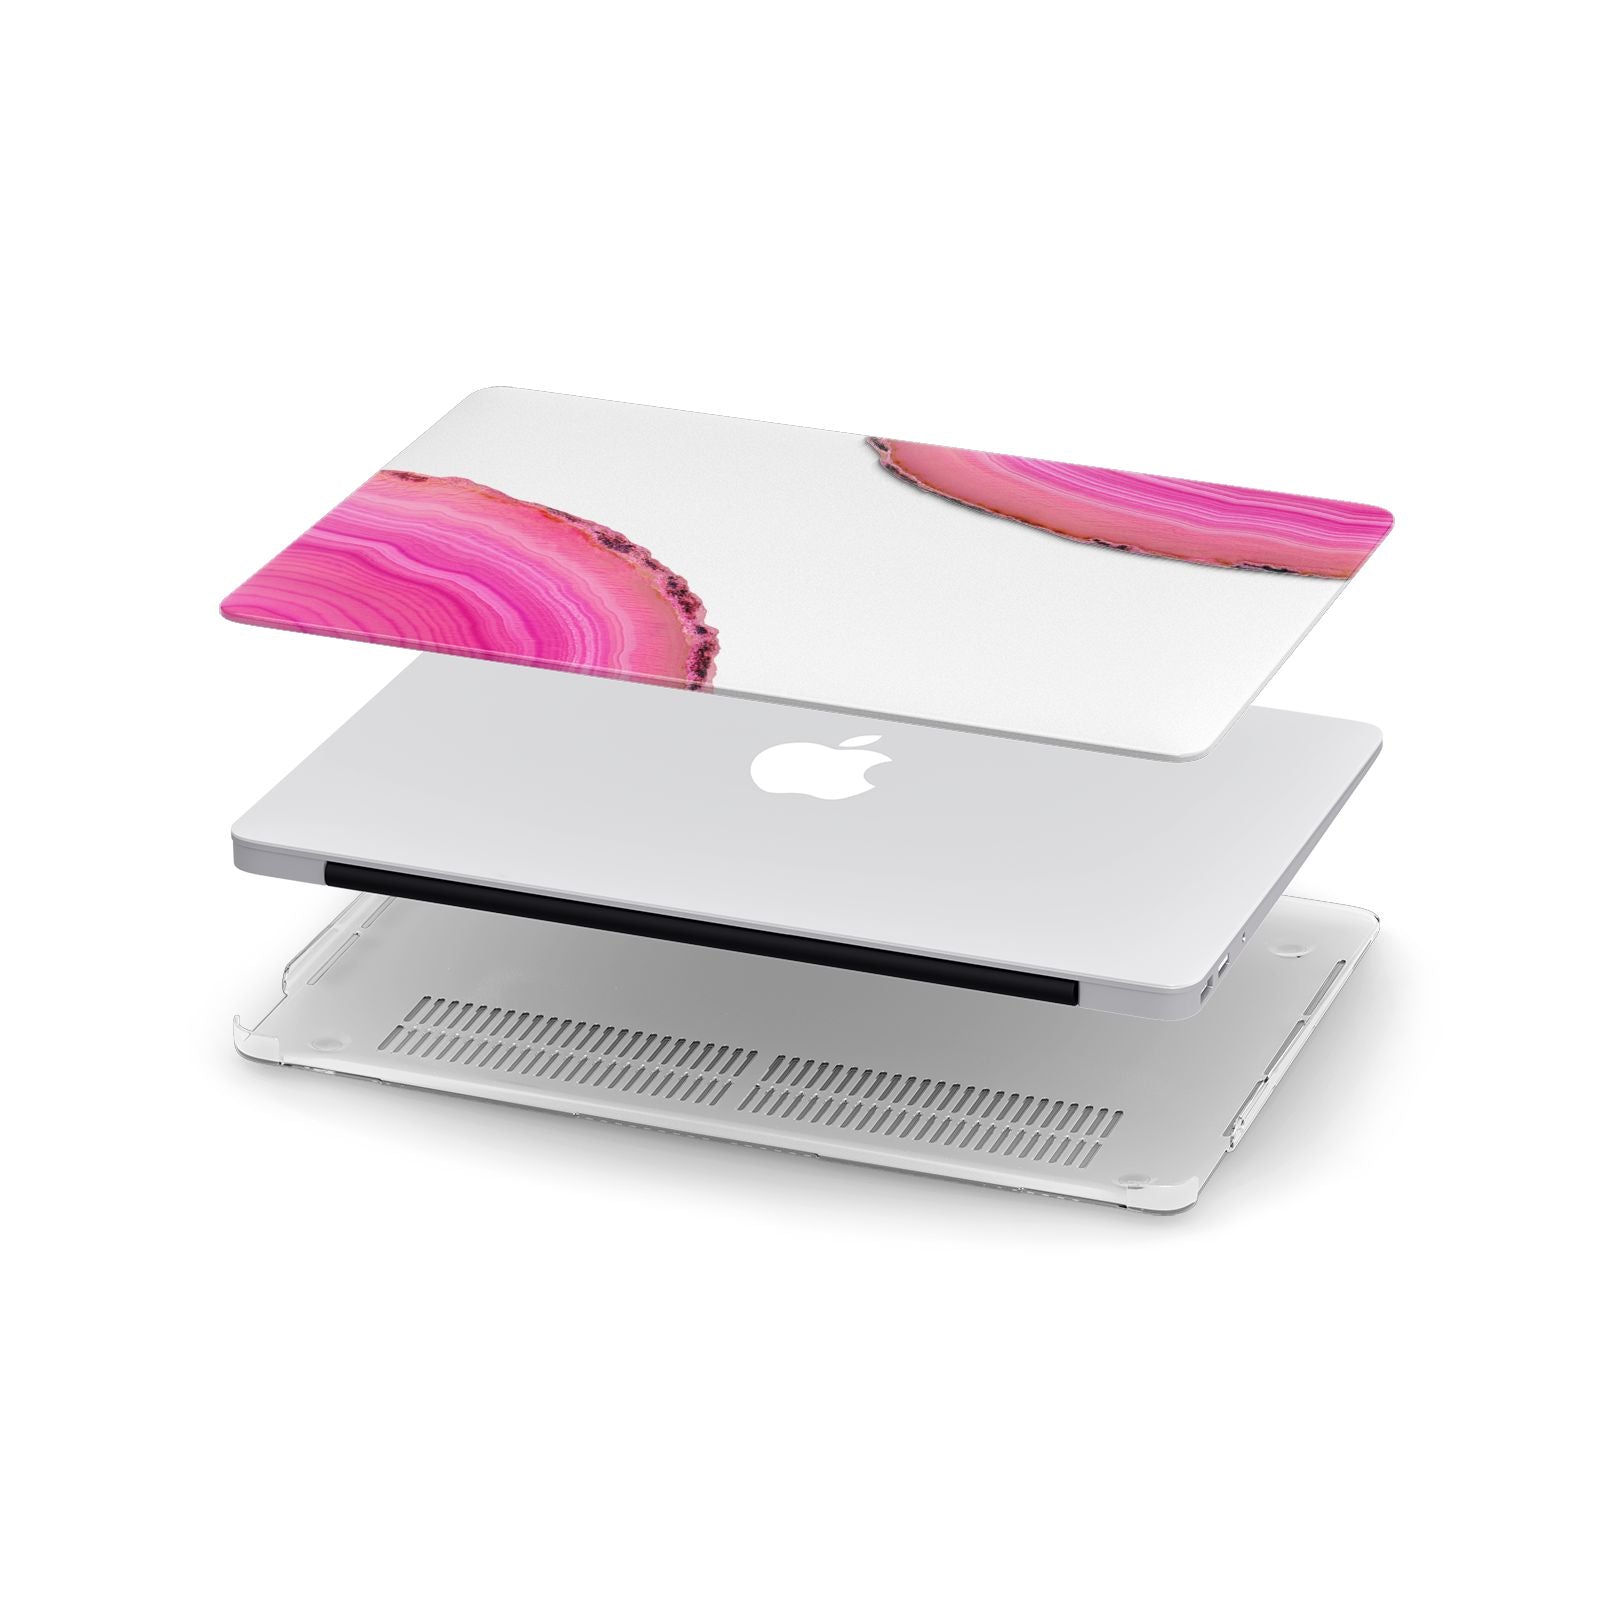 Agate Bright Pink Apple MacBook Case in Detail